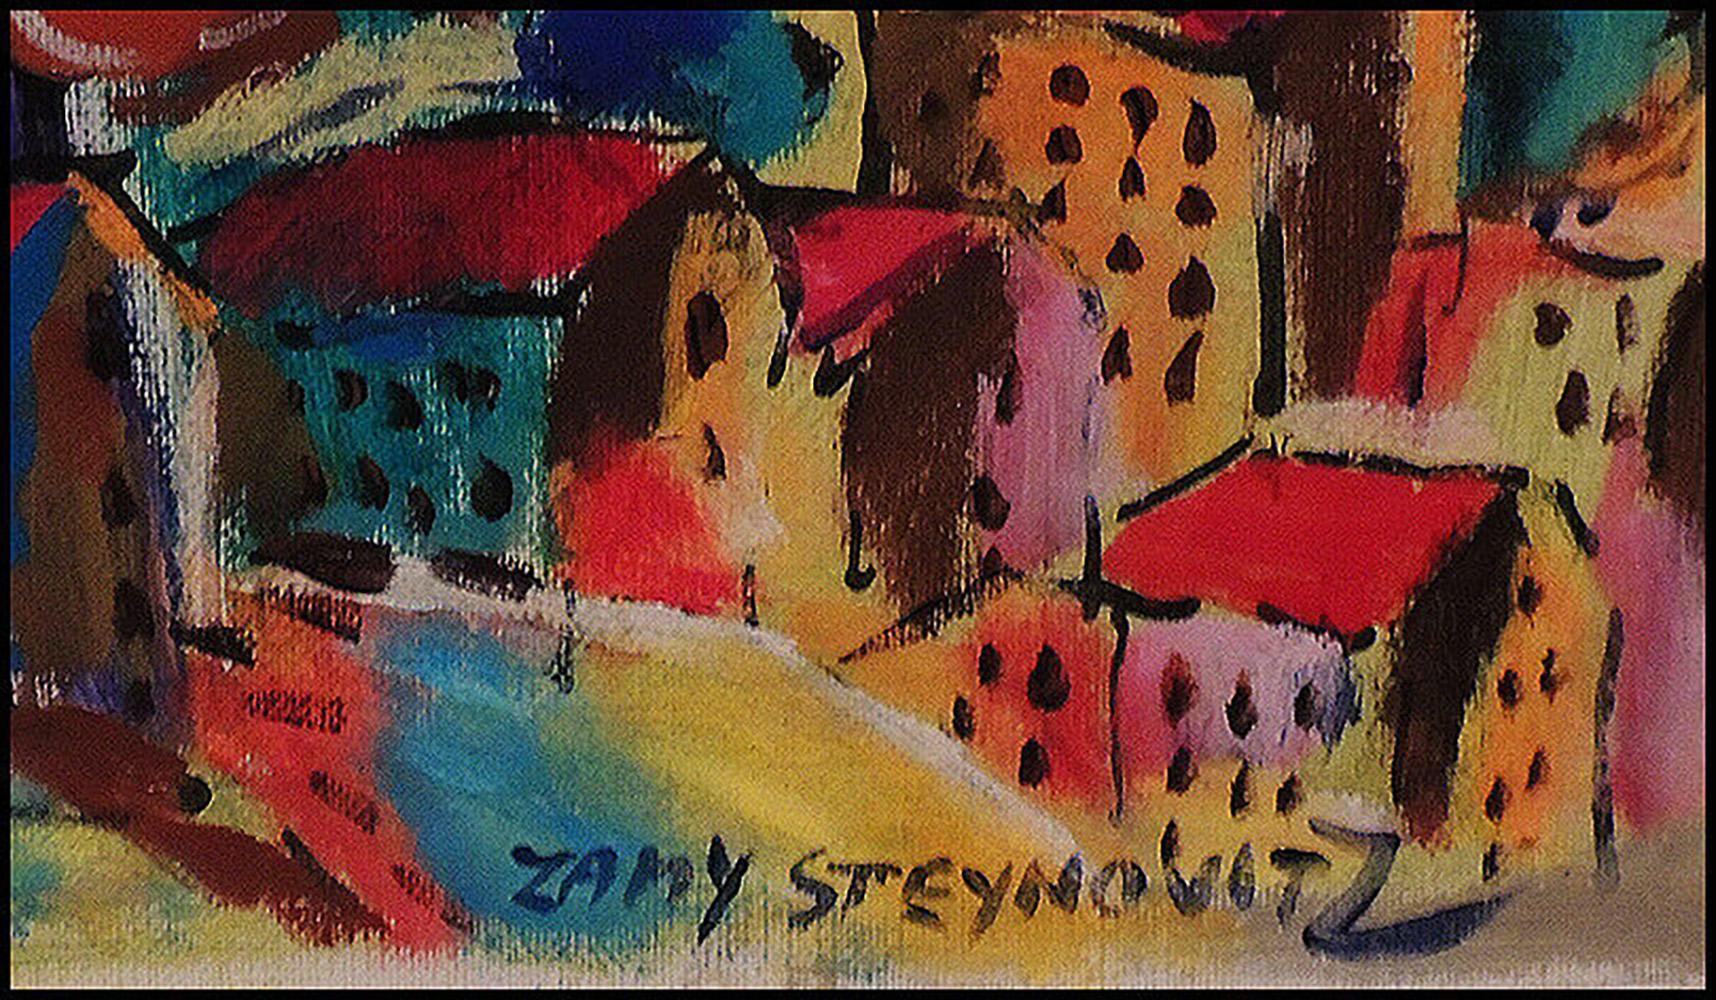 steynovitz paintings